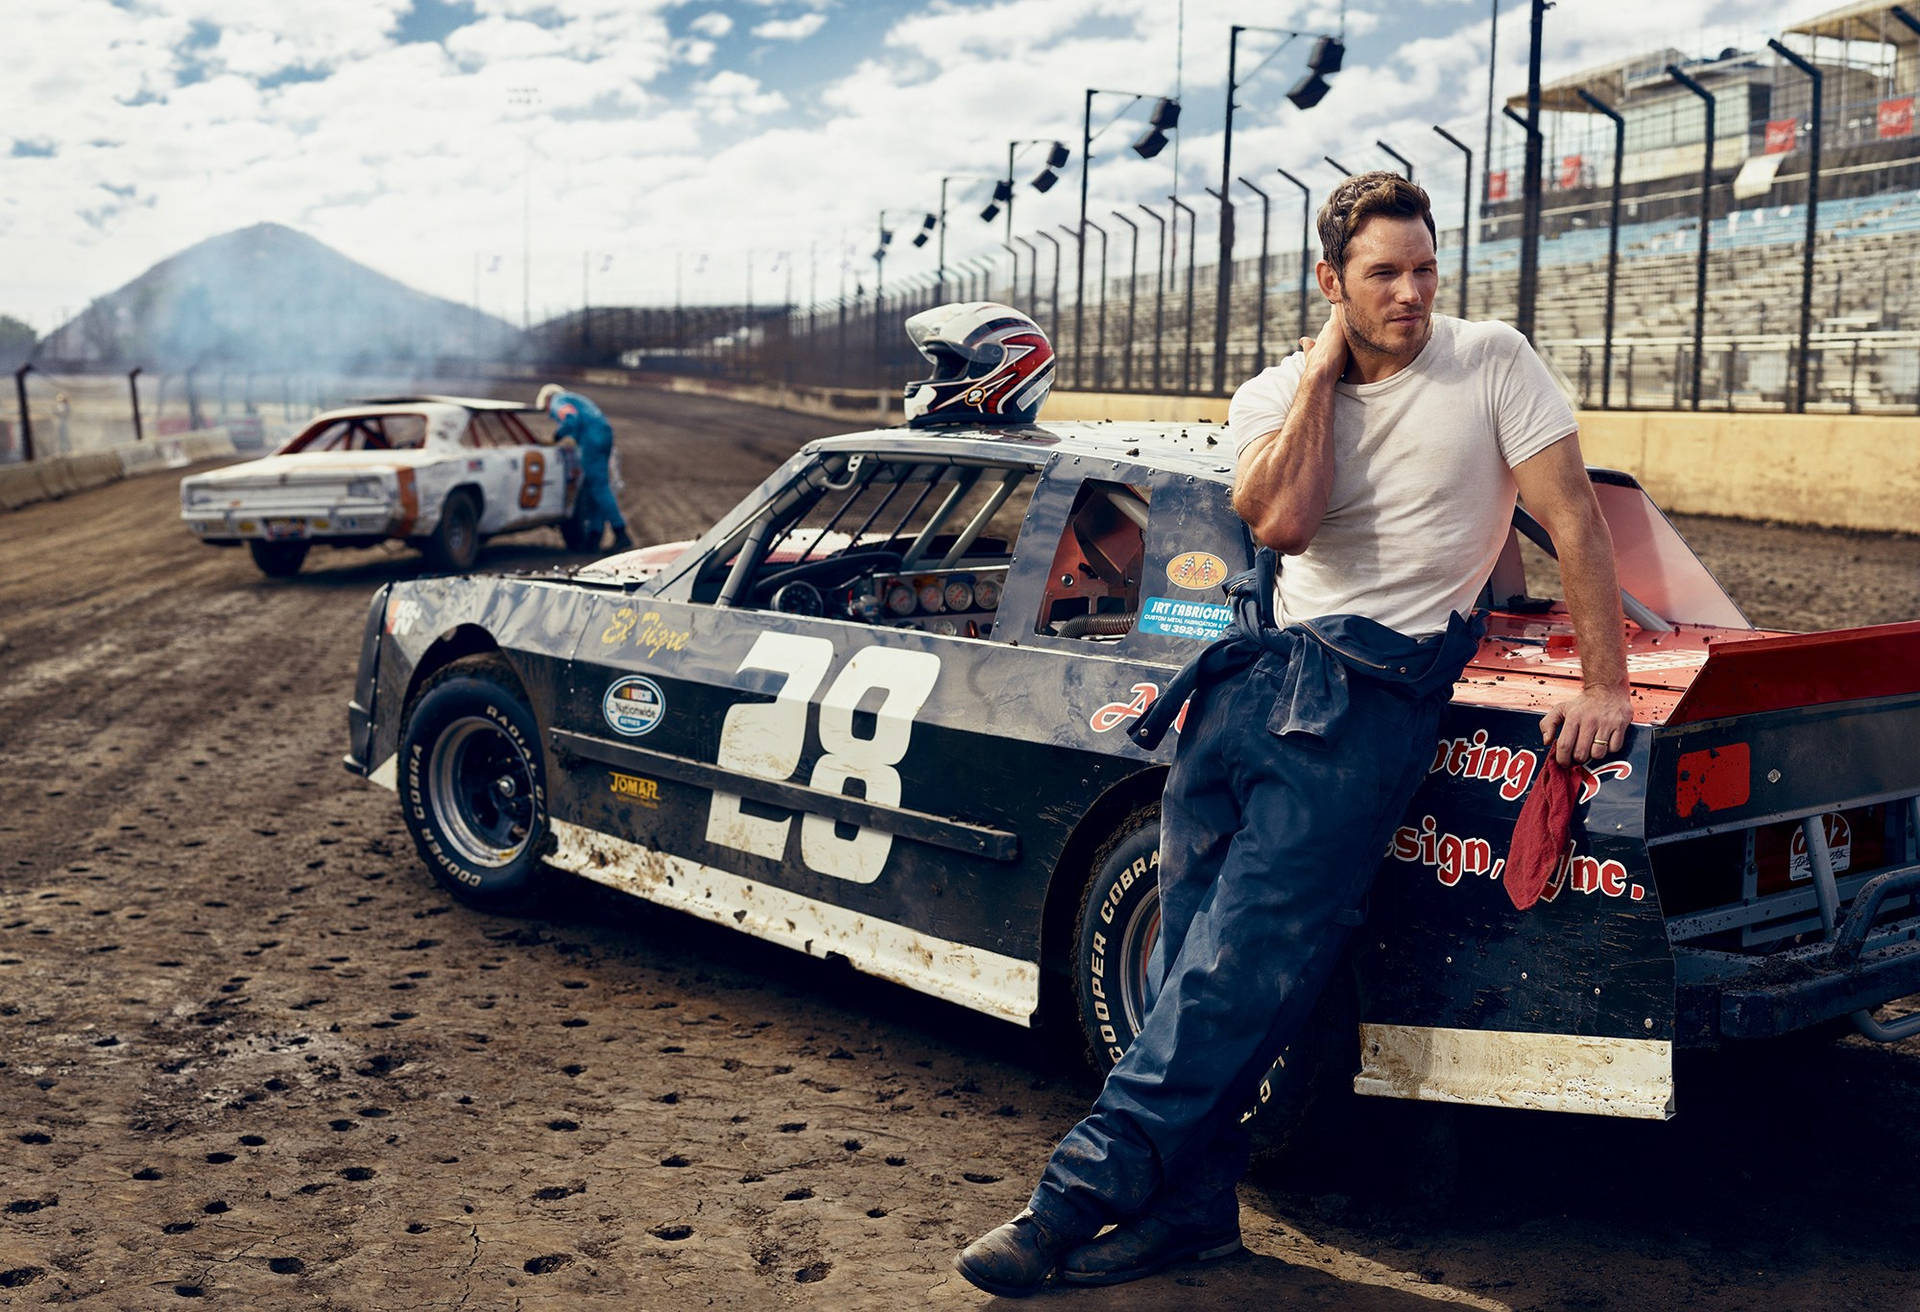 Chris Pratt Race Car Vanity Fair Wallpaper